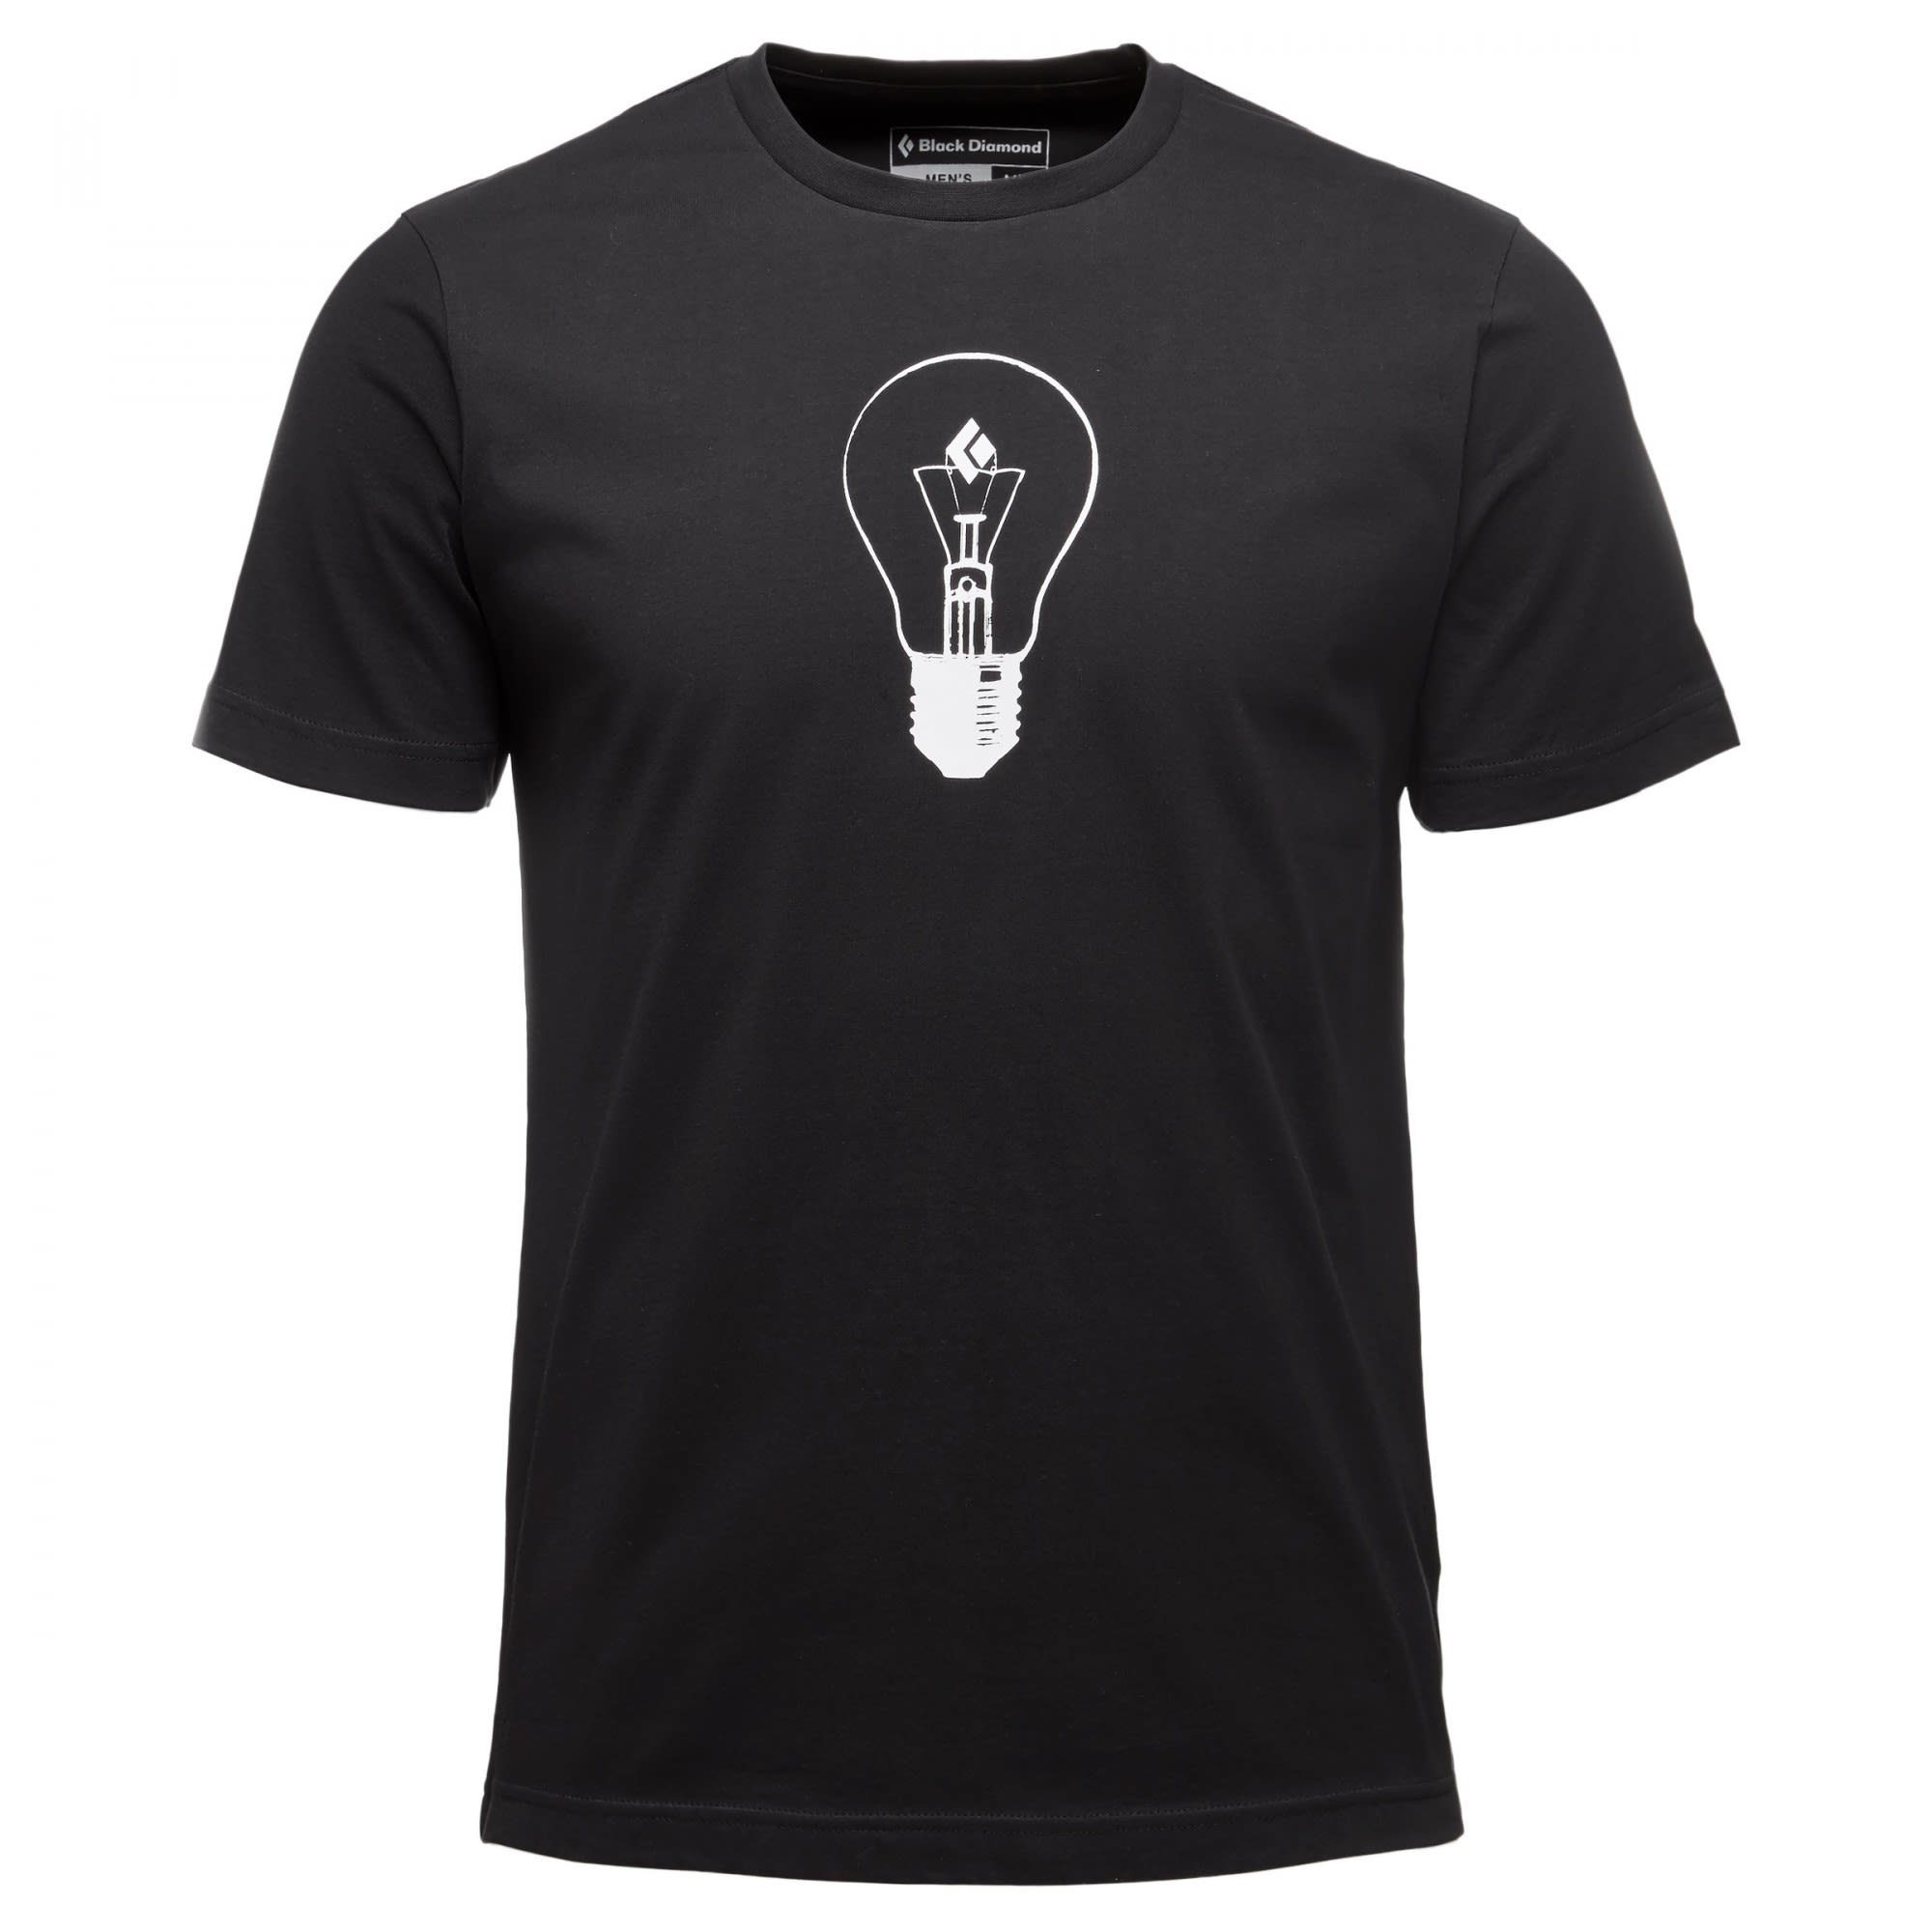 Black Diamond T-Shirt Black Diamond S/s Herren Tee M Kurzarm-Shirt Idea